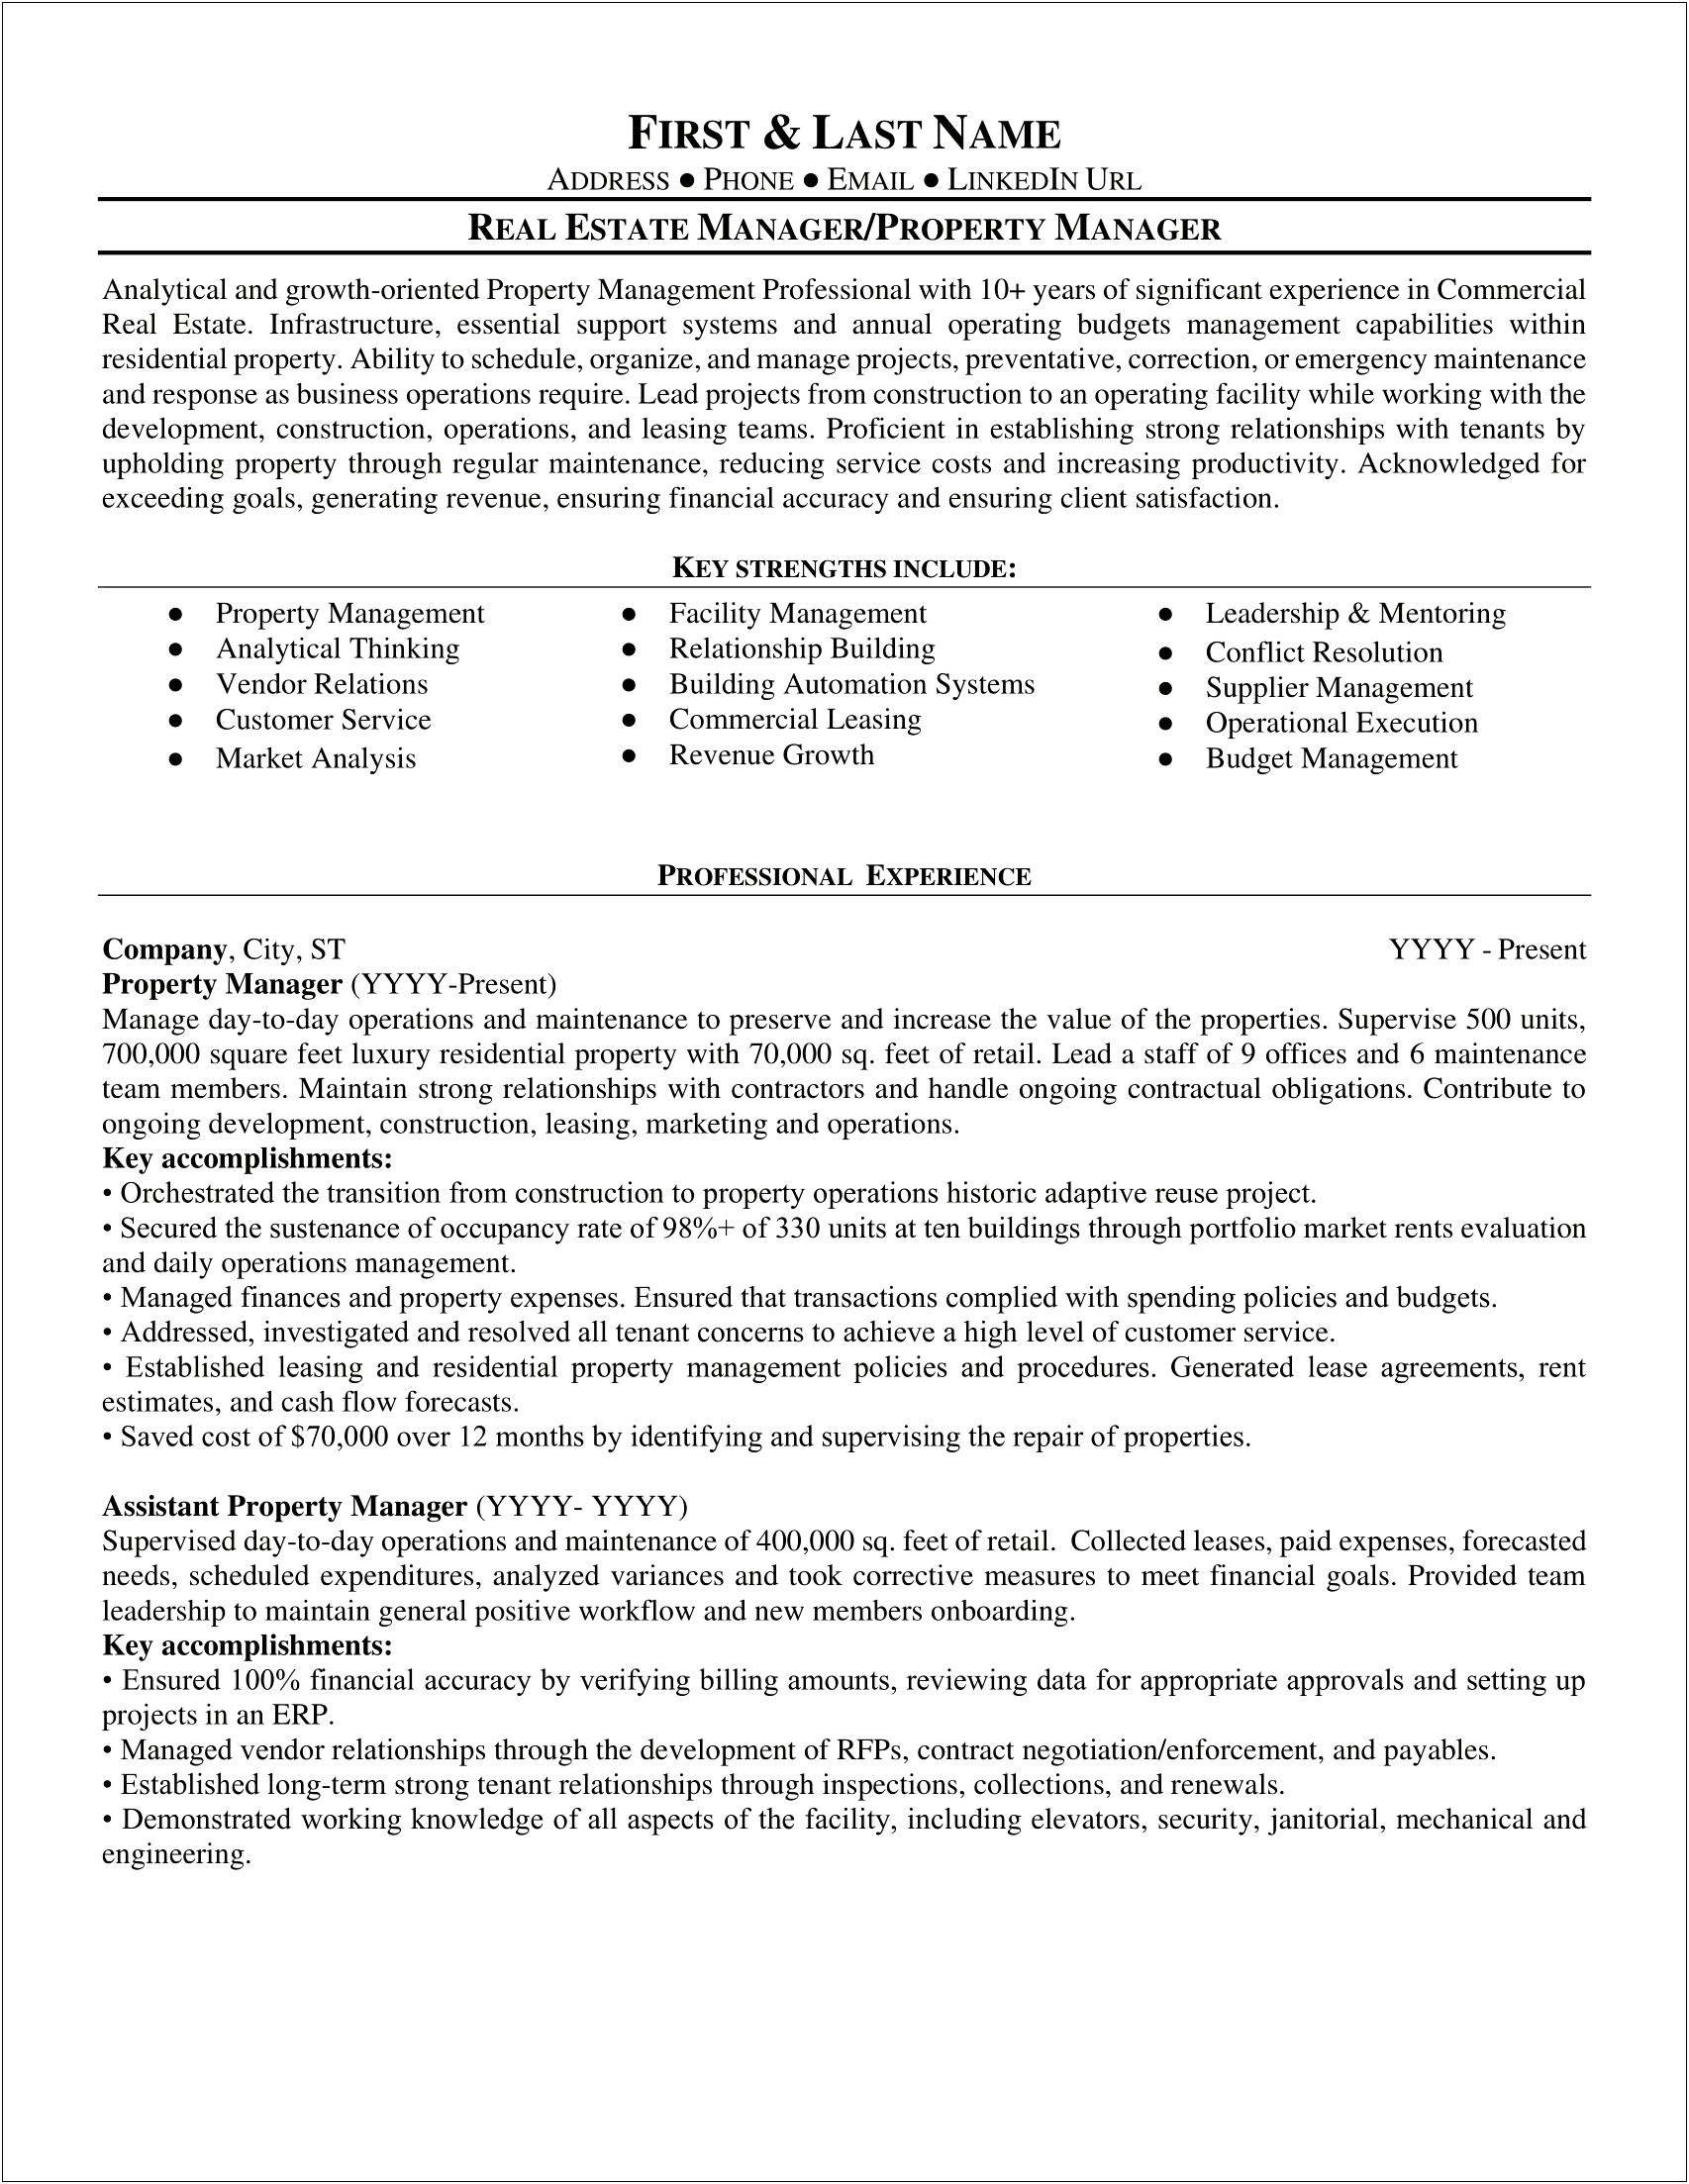 Resume Job Description Leasing Manager Property Manament